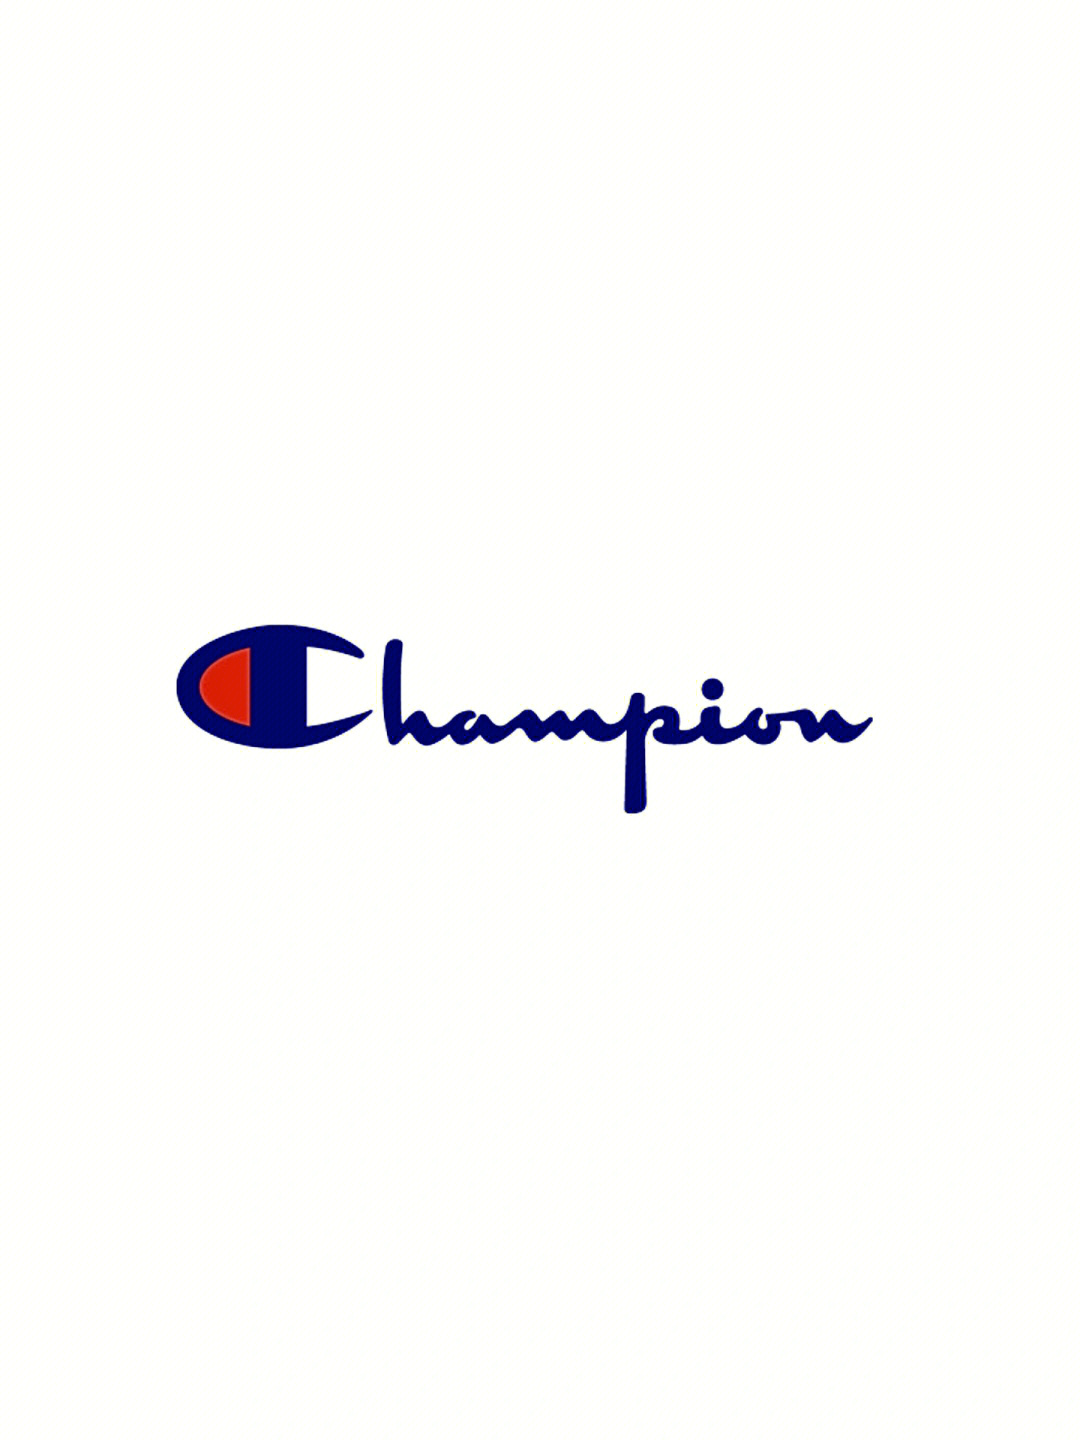 仿champion的牌子logo图片